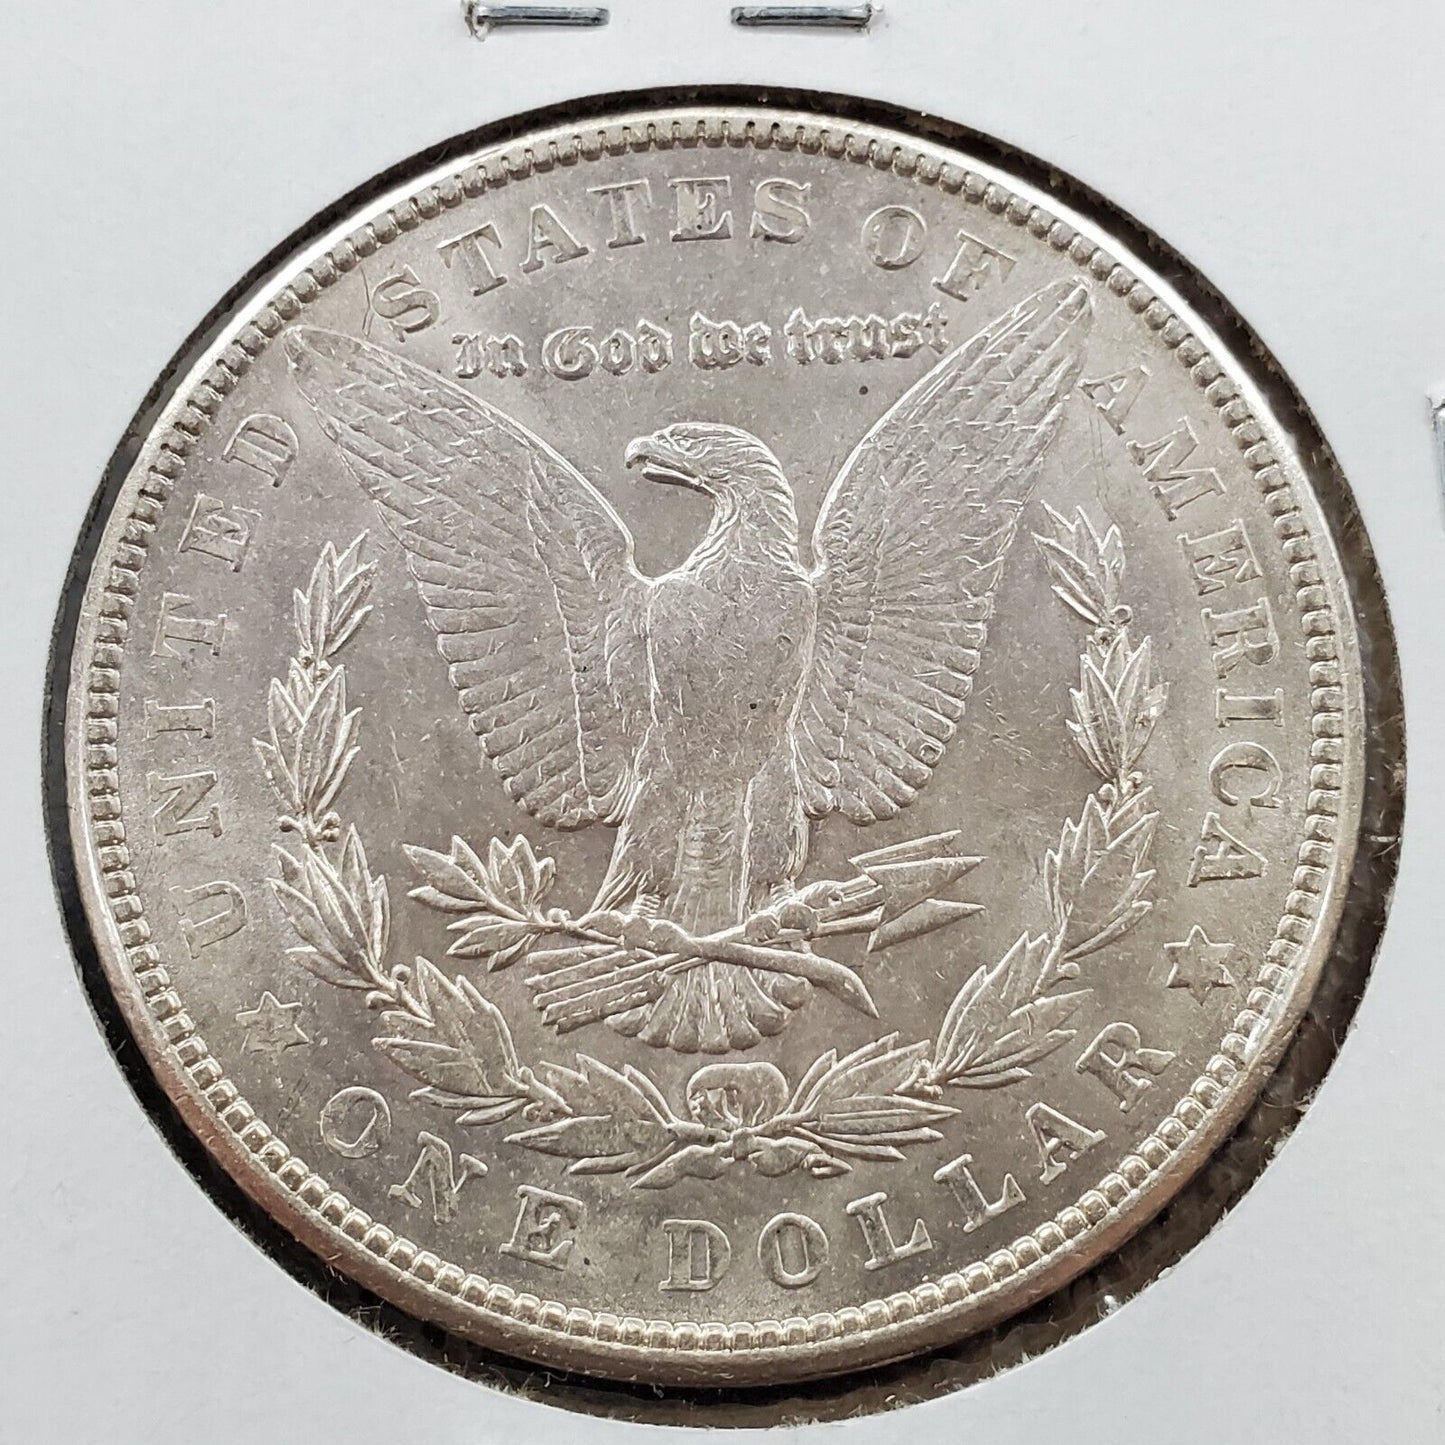 1900 P $1 Morgan Silver Dollar Coin Vam-11 Double Wing Die Reverse AVG UNC